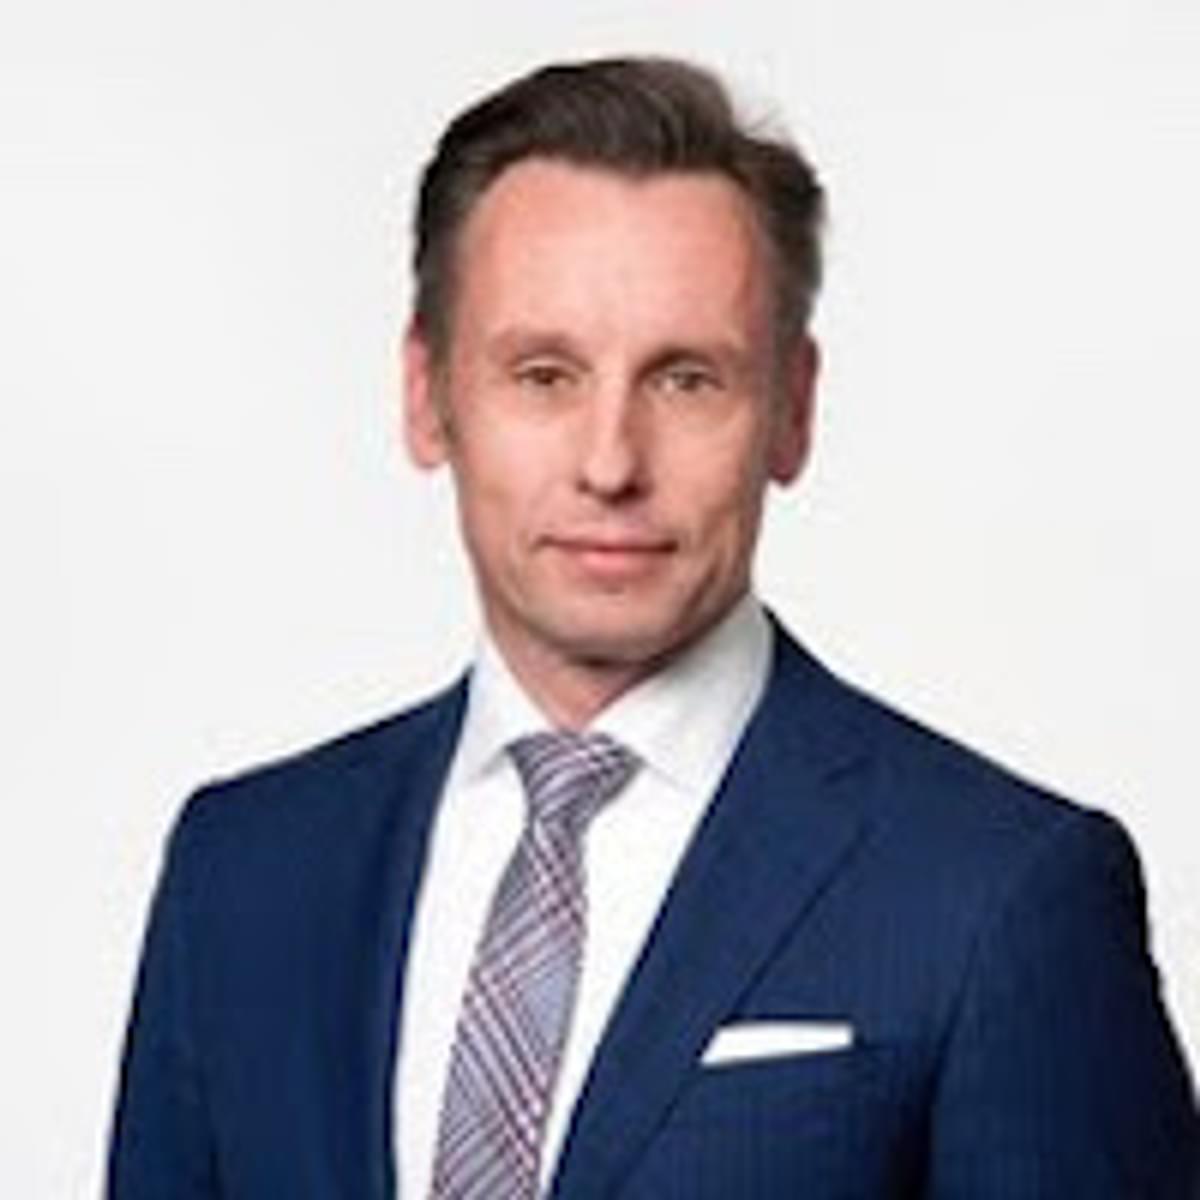 Riverbed benoemt Andy Elder tot Chief Sales Officer image